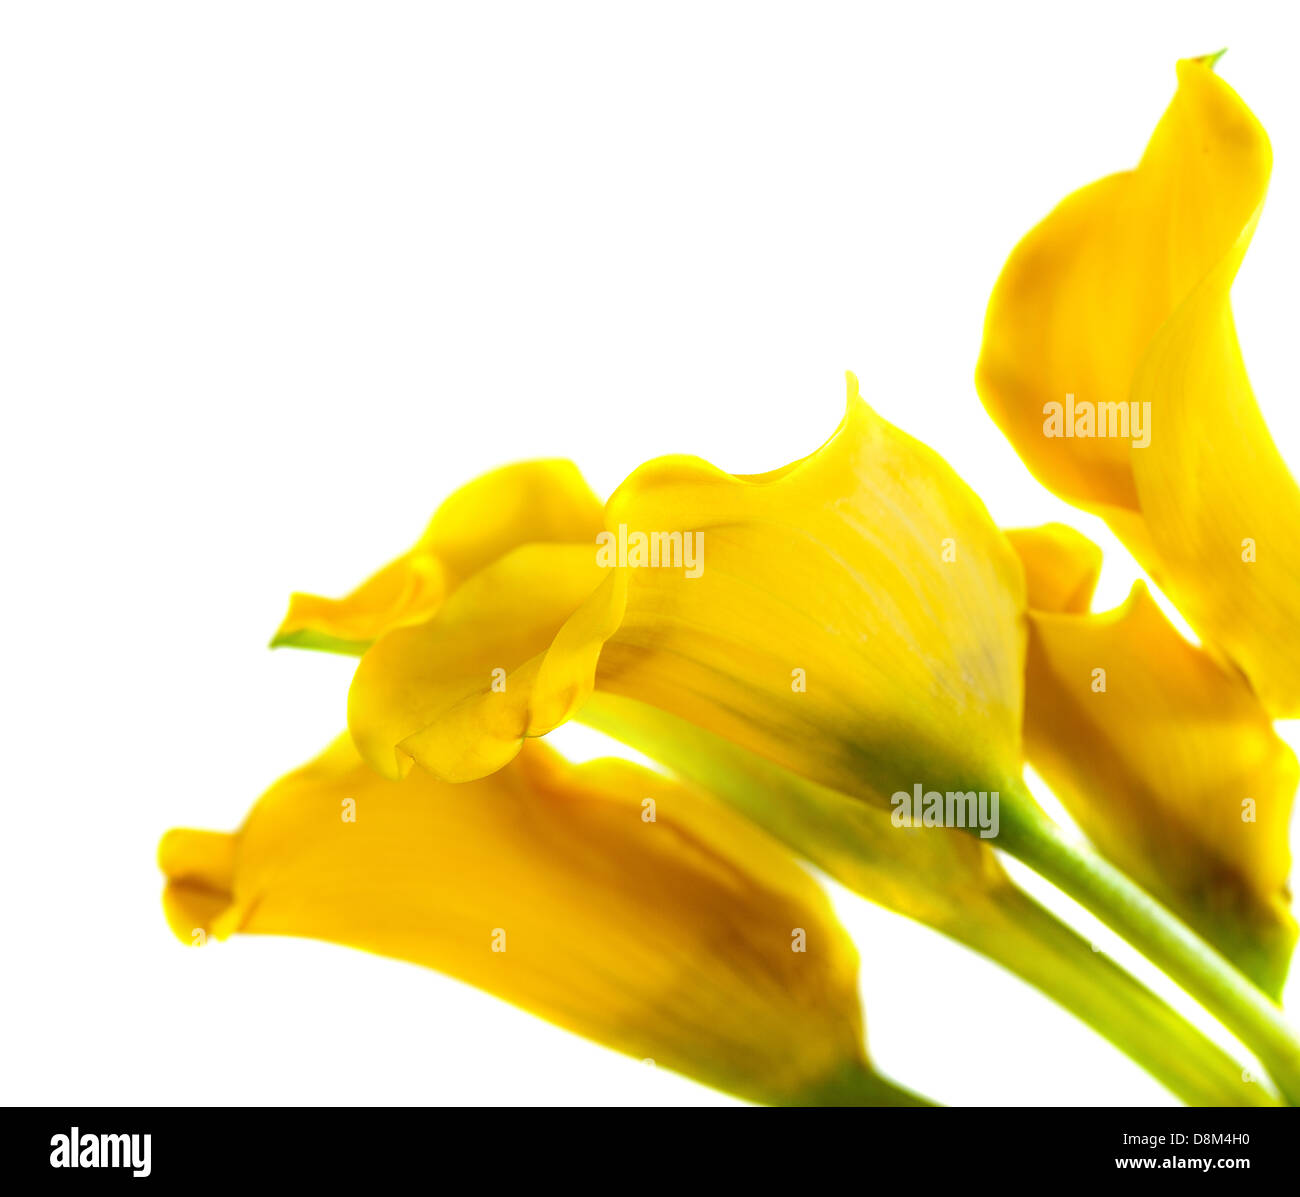 Cala amarilla lirios fotografías e imágenes de alta resolución - Alamy